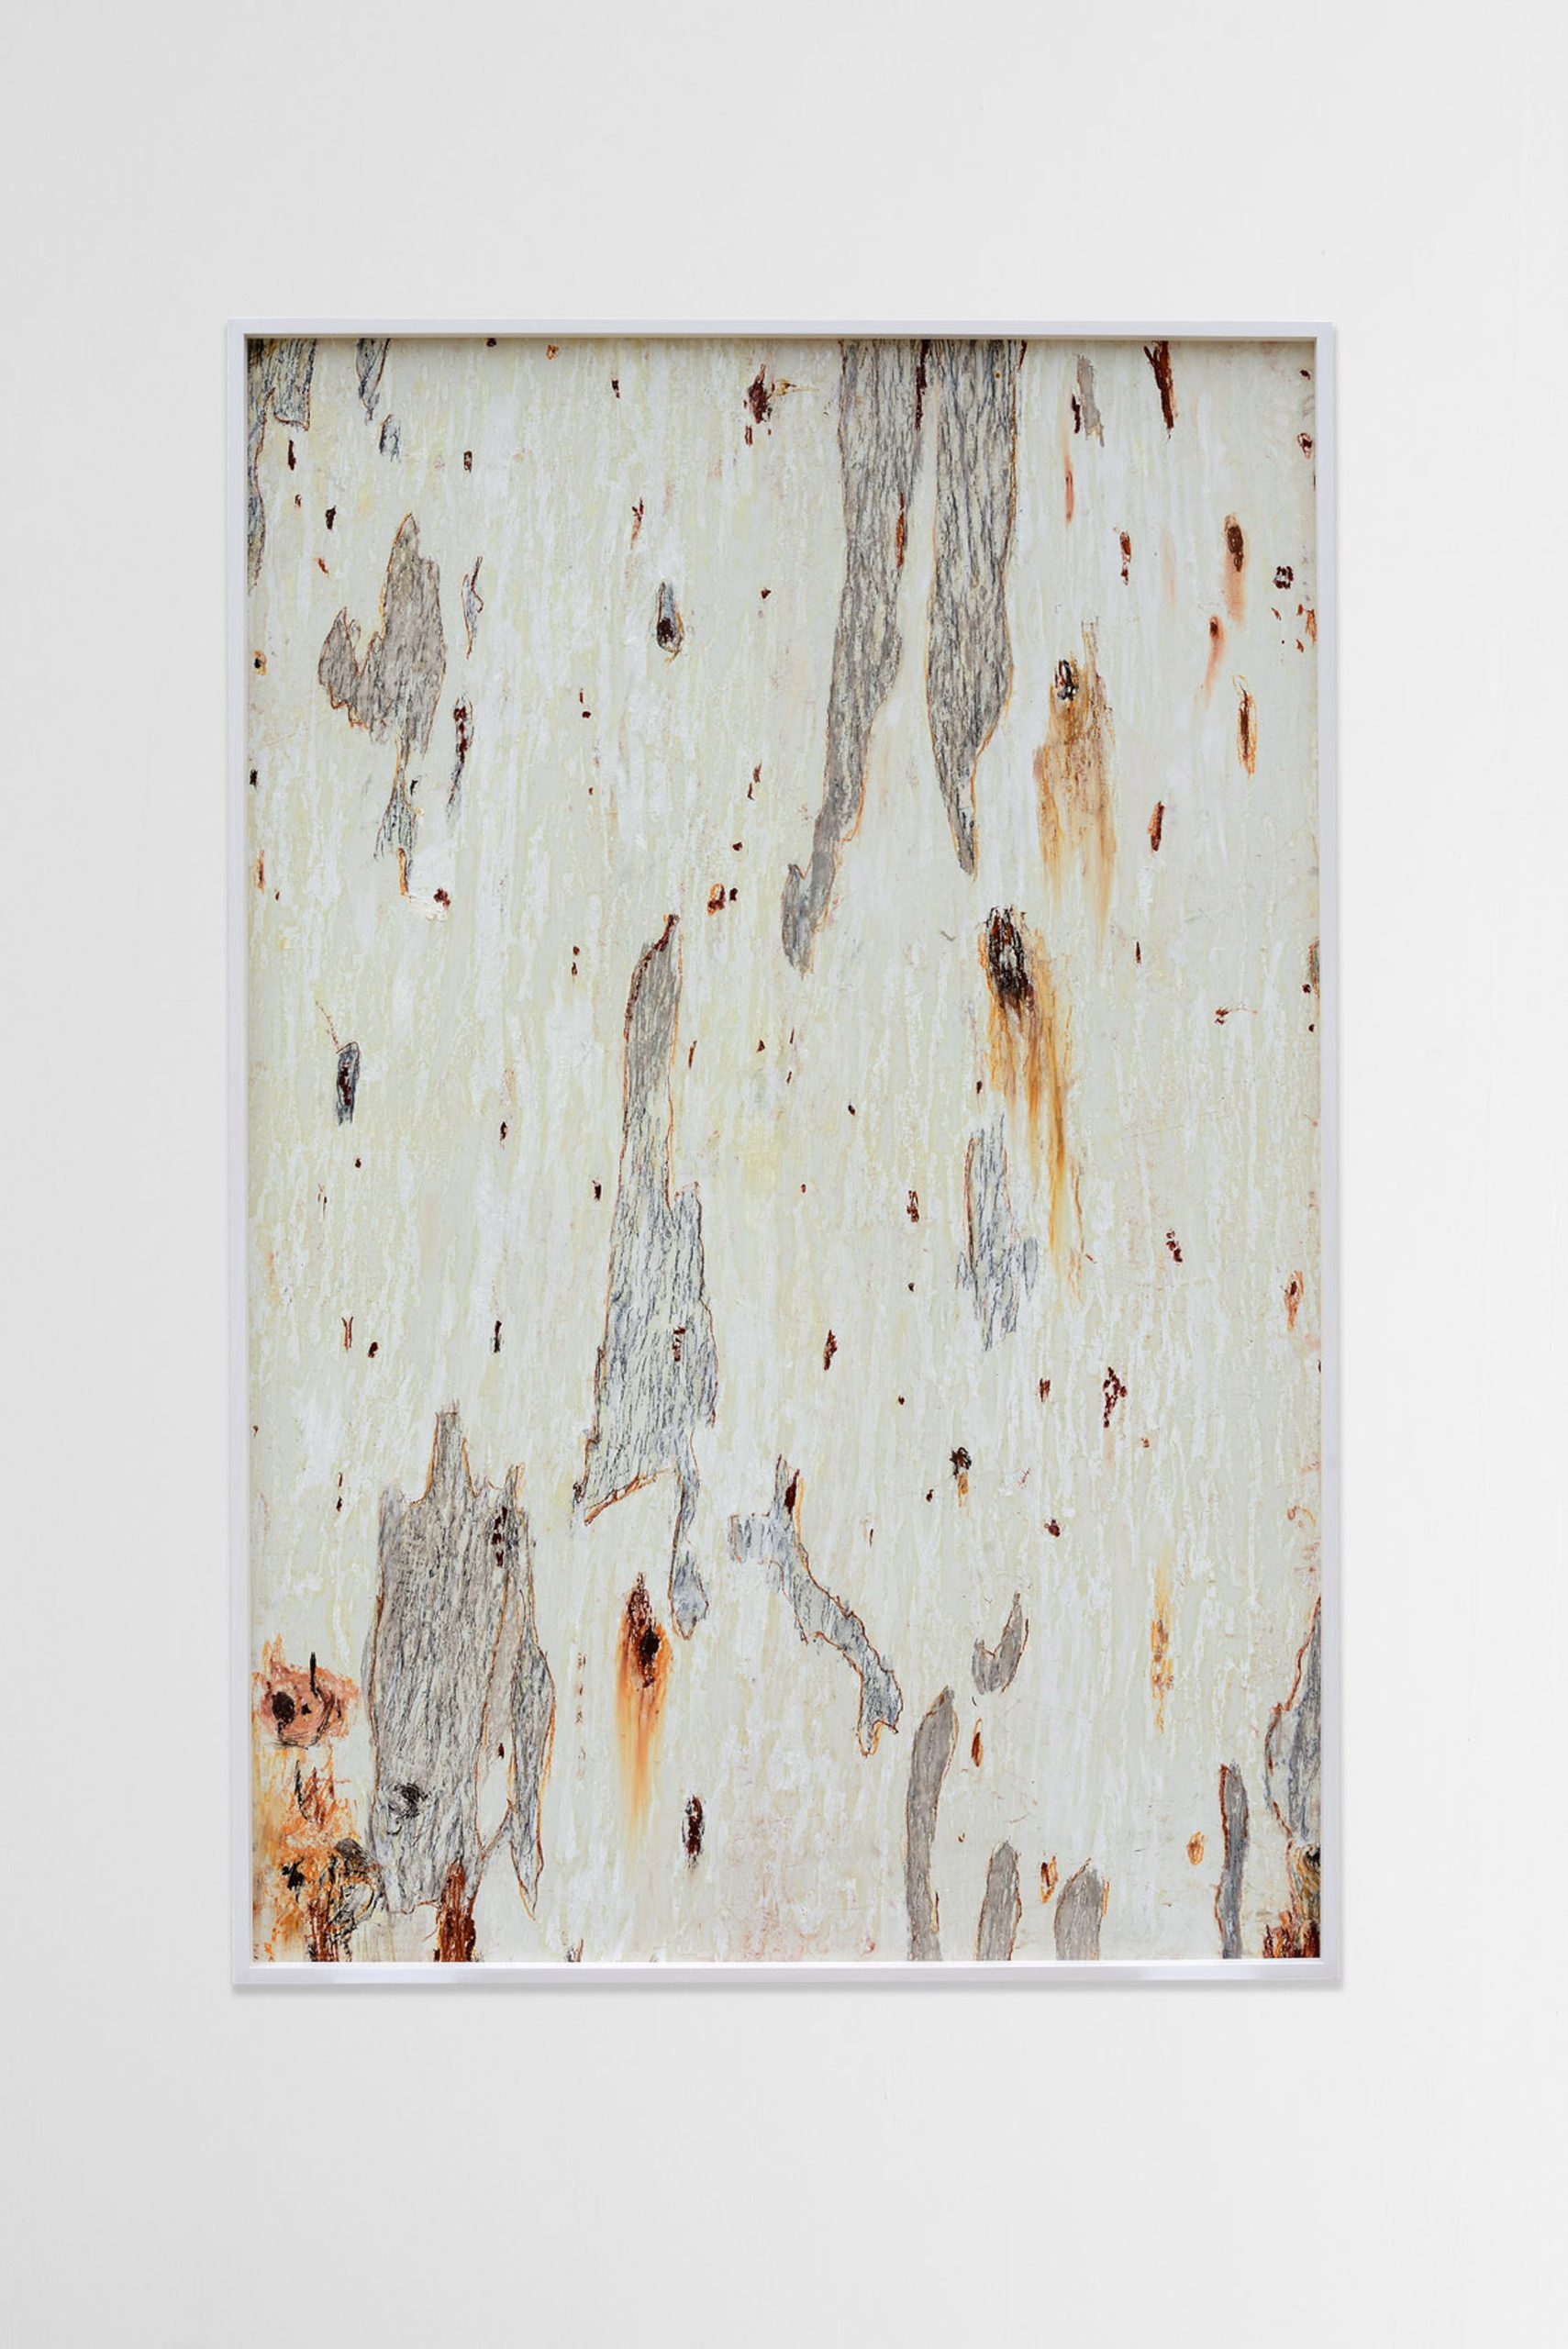 Giorgia Severi, Eucalyptus Camaldolensys - Australian Red Gum Tree#2, 2016, graphites and wax pastels on paper, 150x100 cm, photo credits @ Michele Alberto Sereni